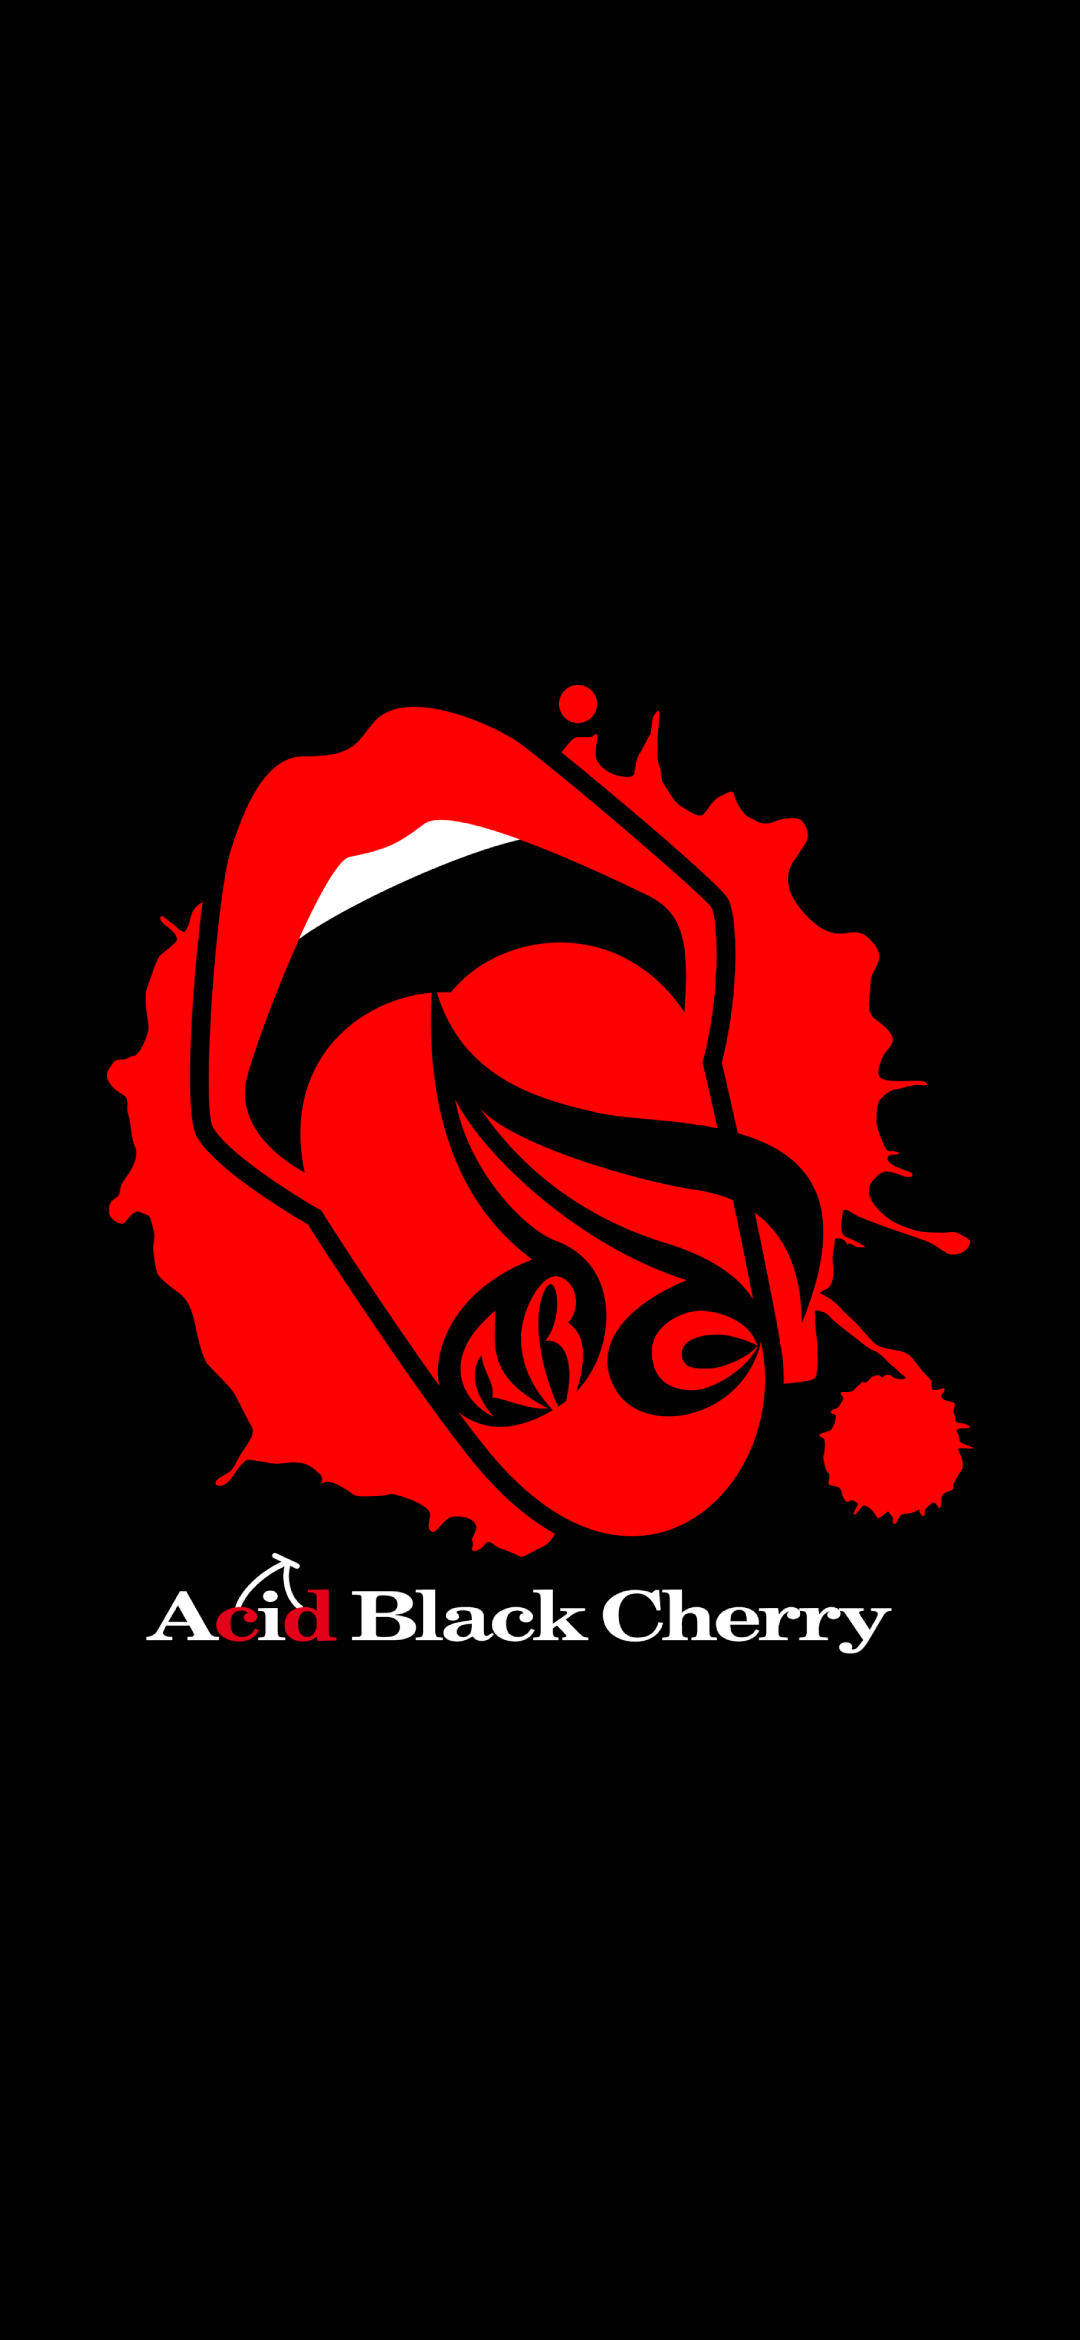 Acid Black Cherry 黒 Rog Phone 3 壁紙 待ち受け スマラン